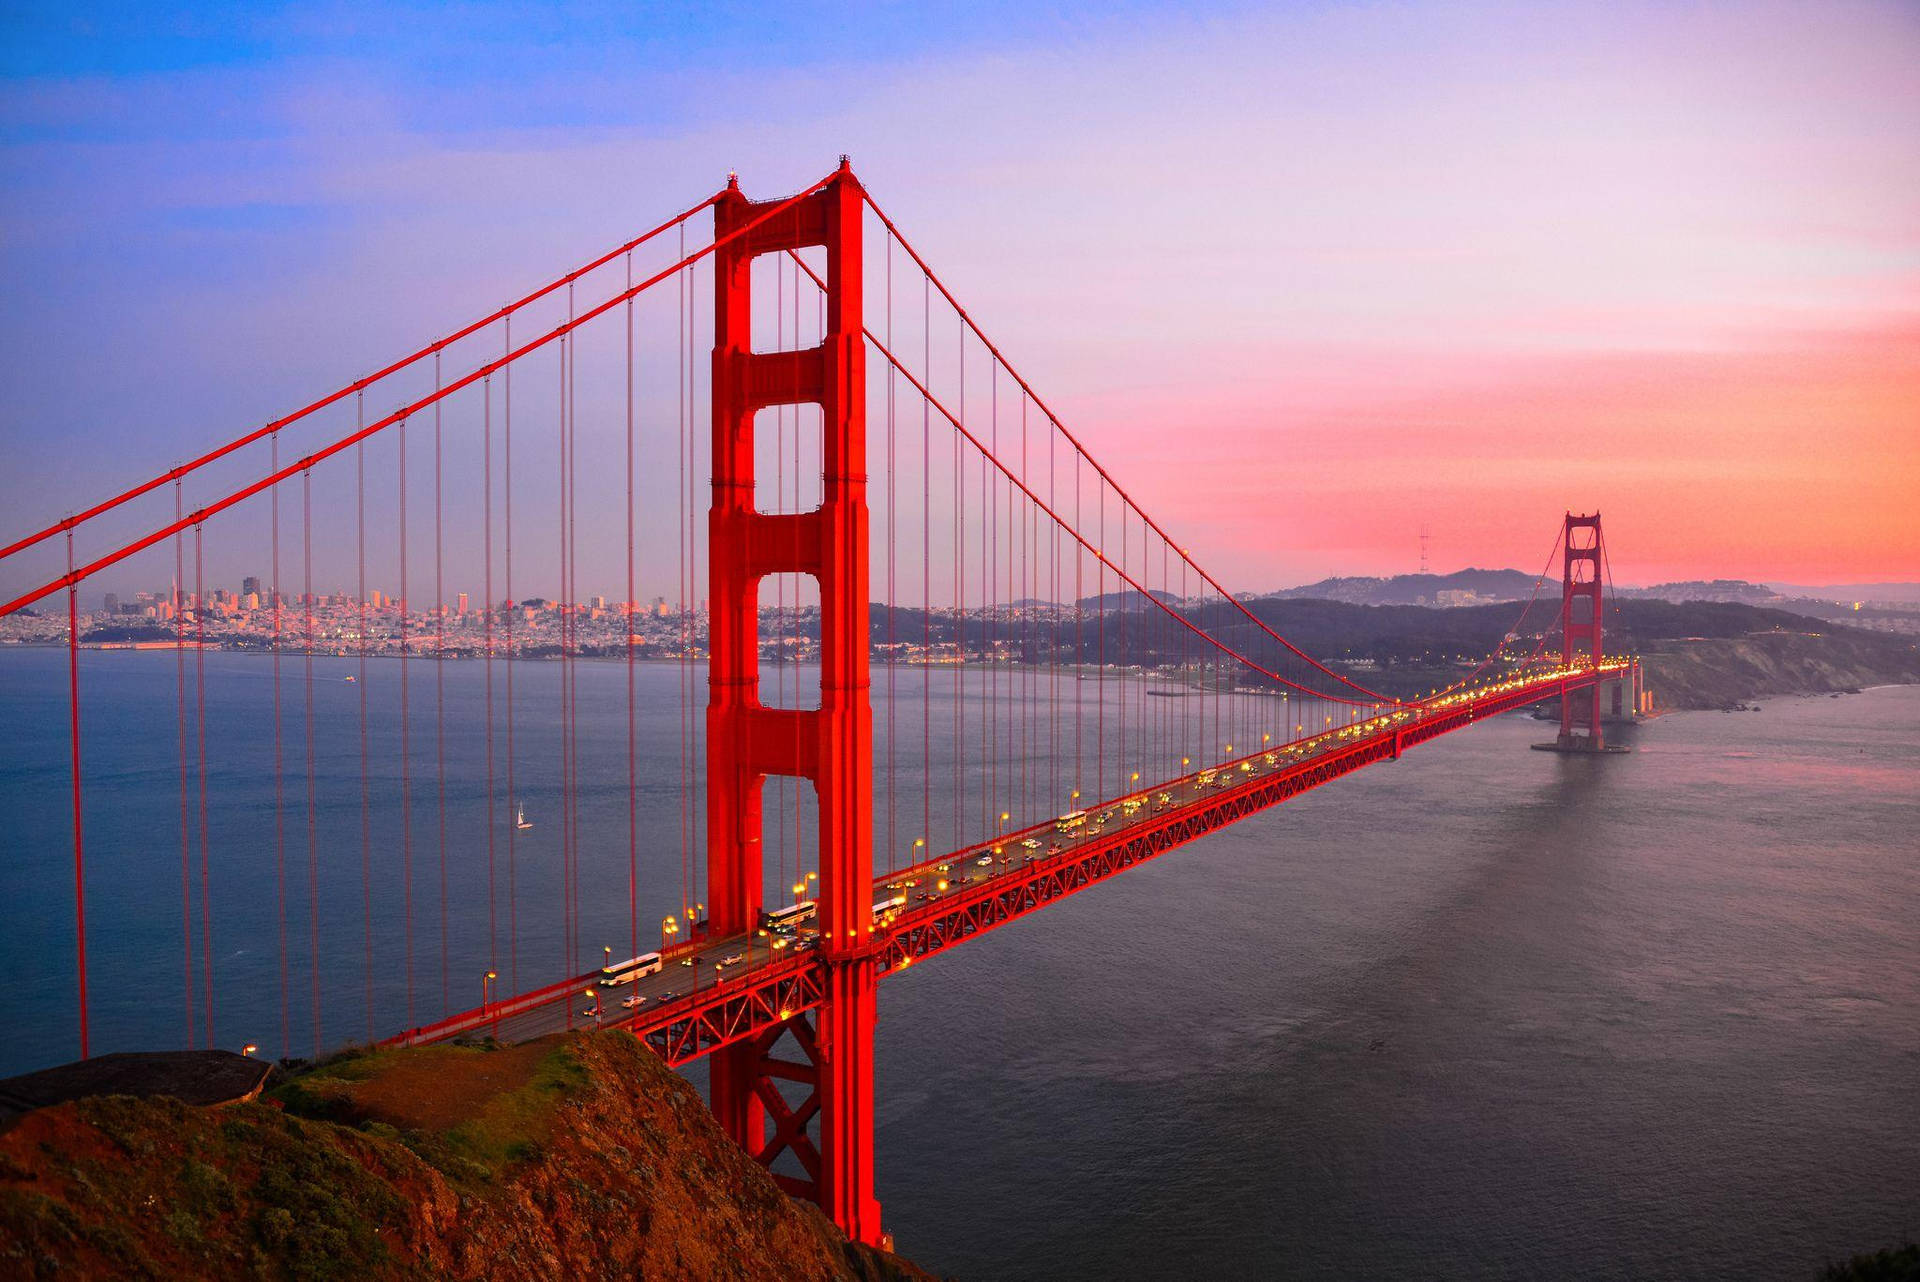 Golden Gate Bridge Sunset Wallpaper